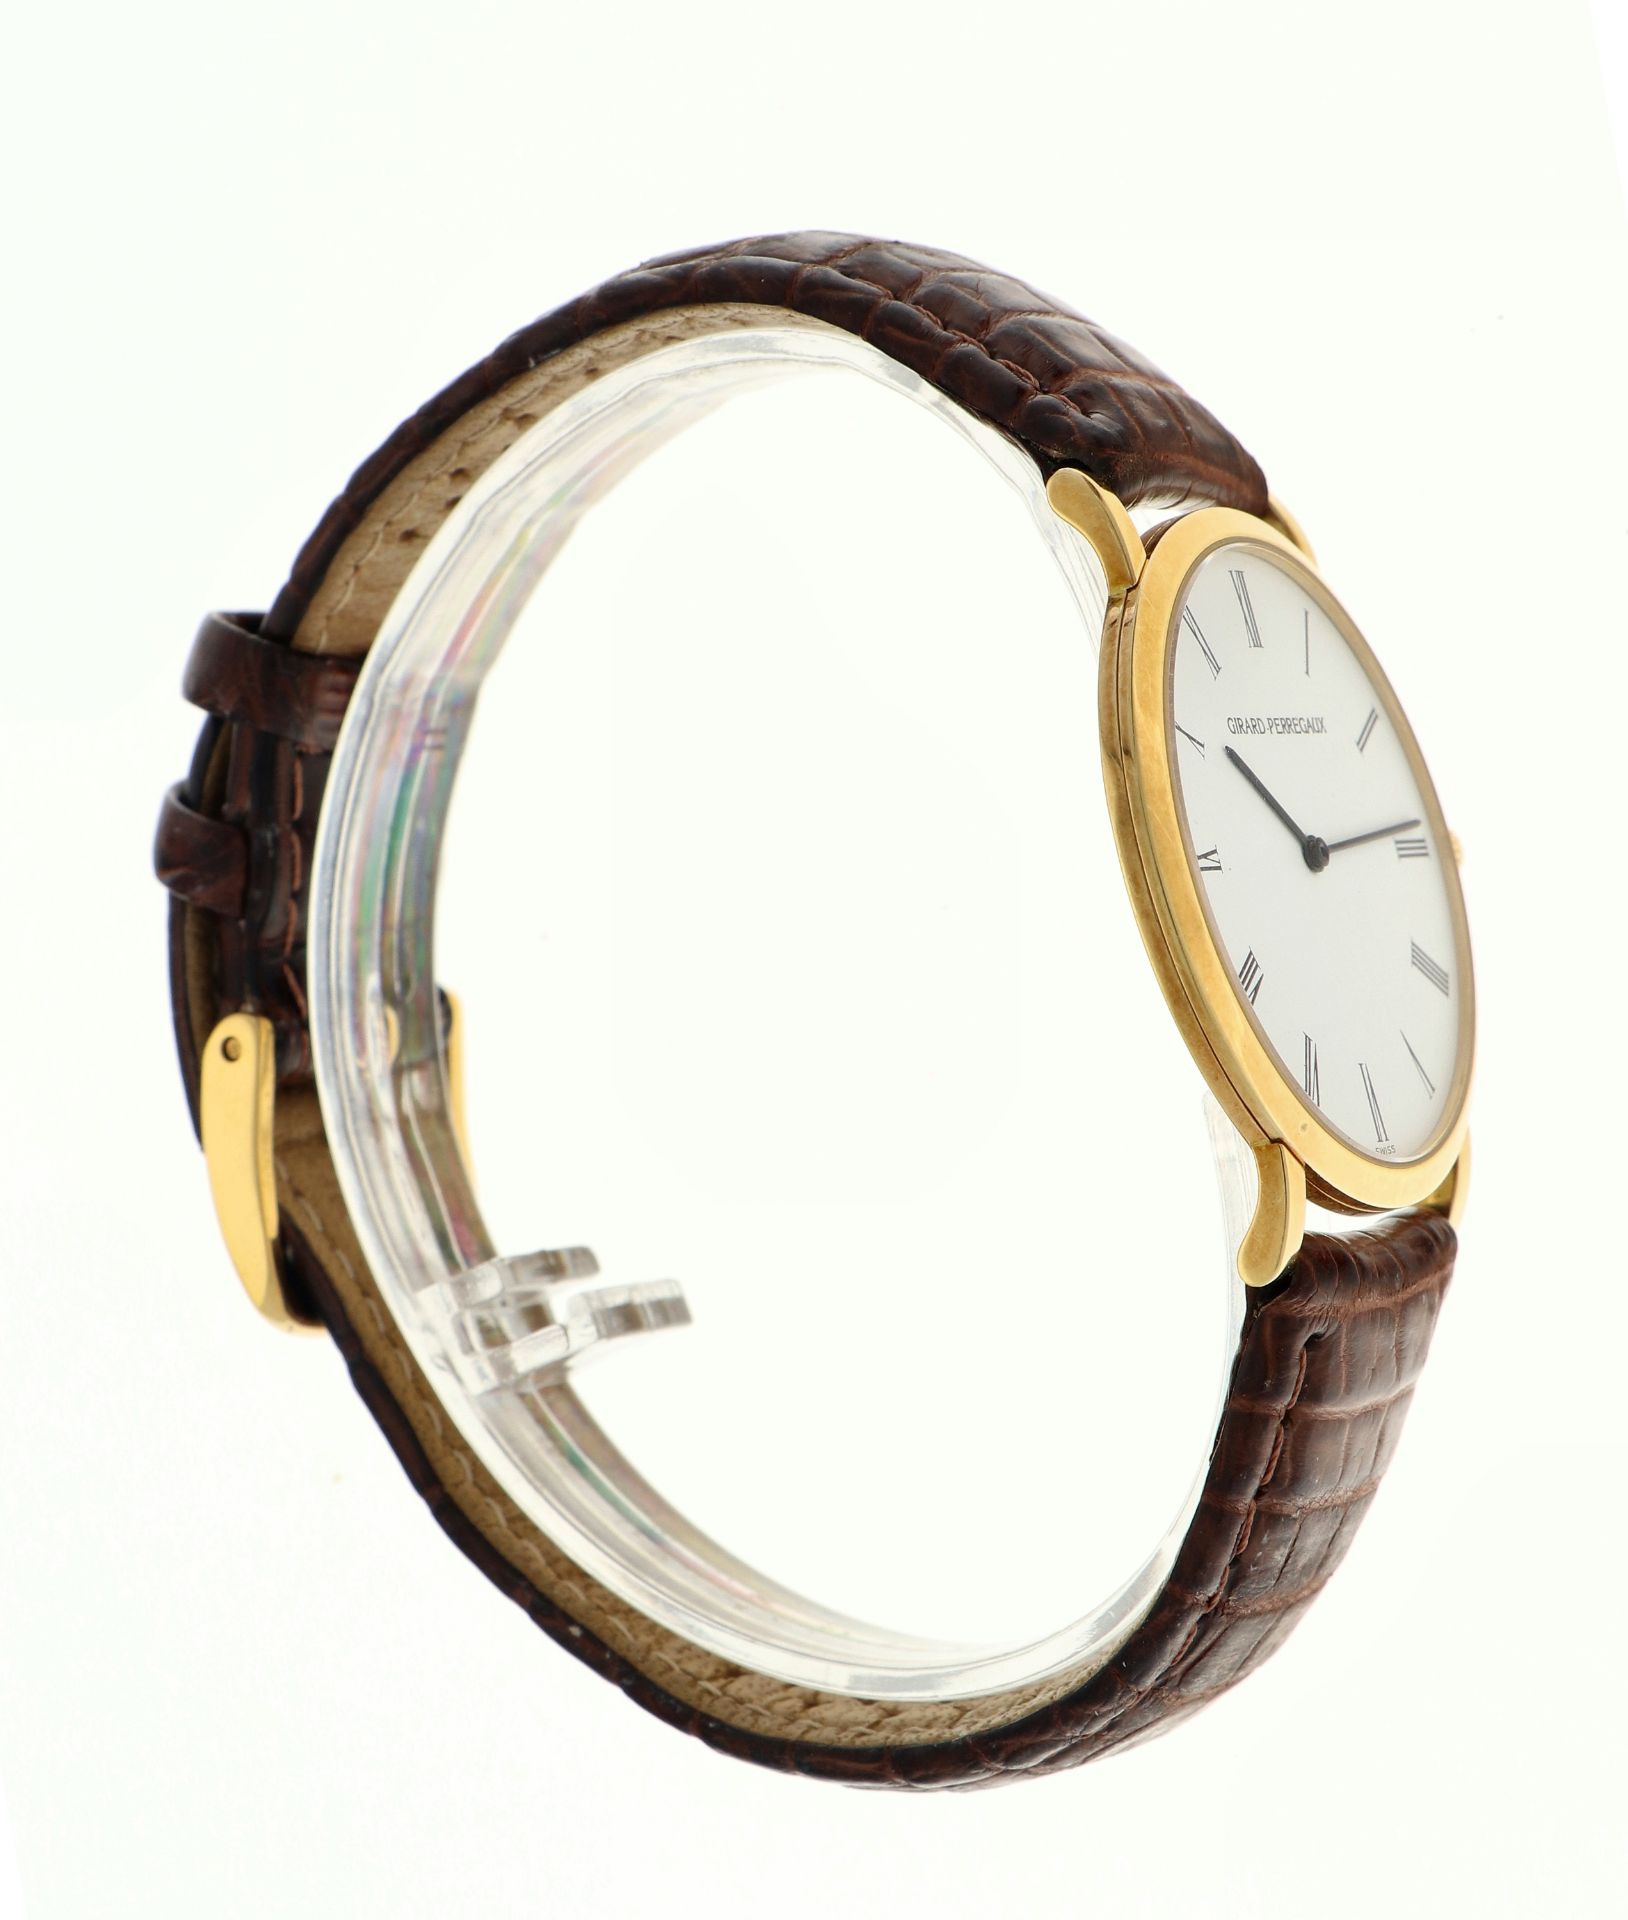 Girard Perregaux Classique Elegance 4762 - Men's watch. - Image 4 of 6